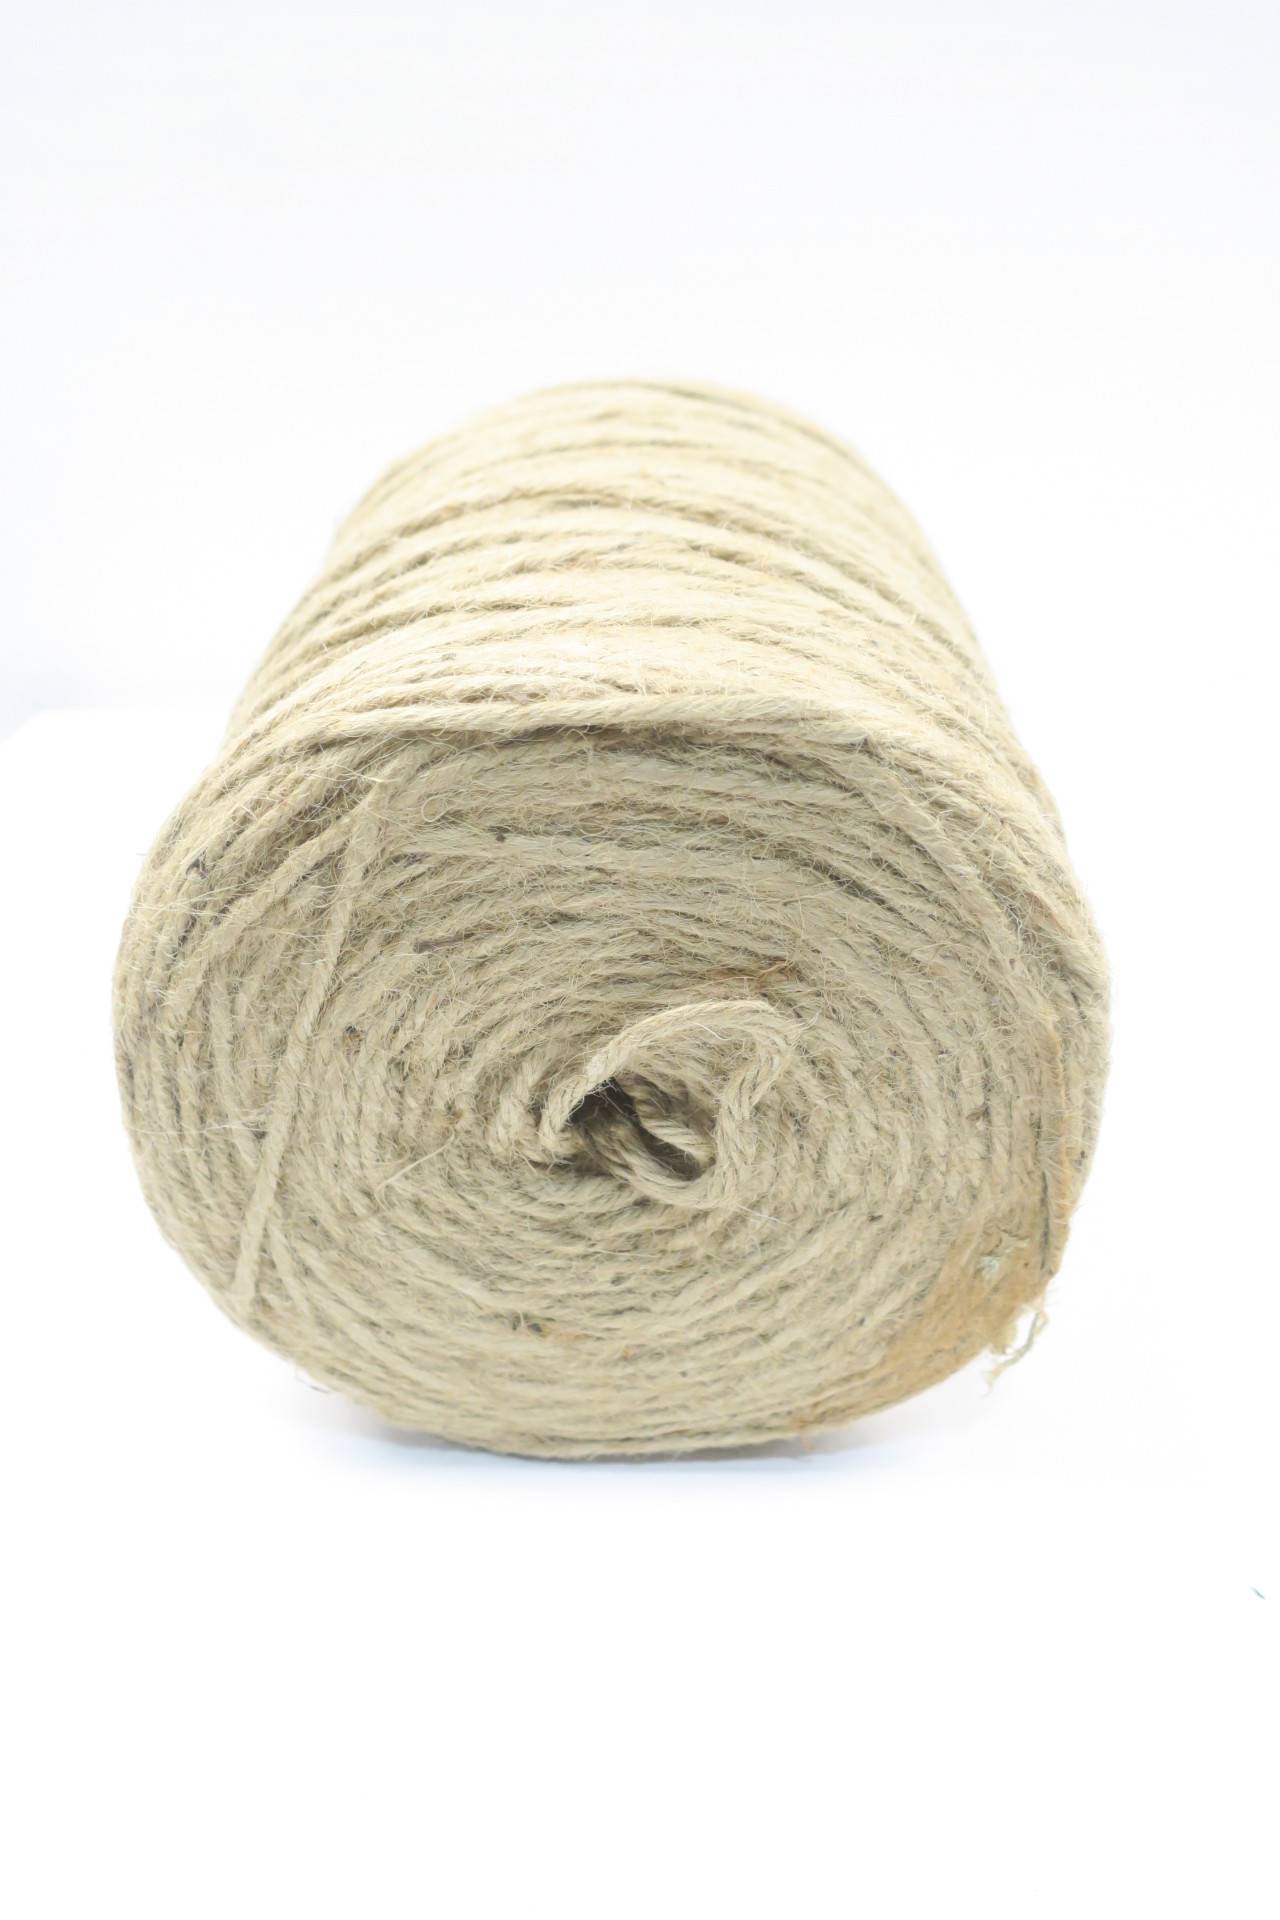 Cotton Twine - 8 Ply S-12841 - Uline